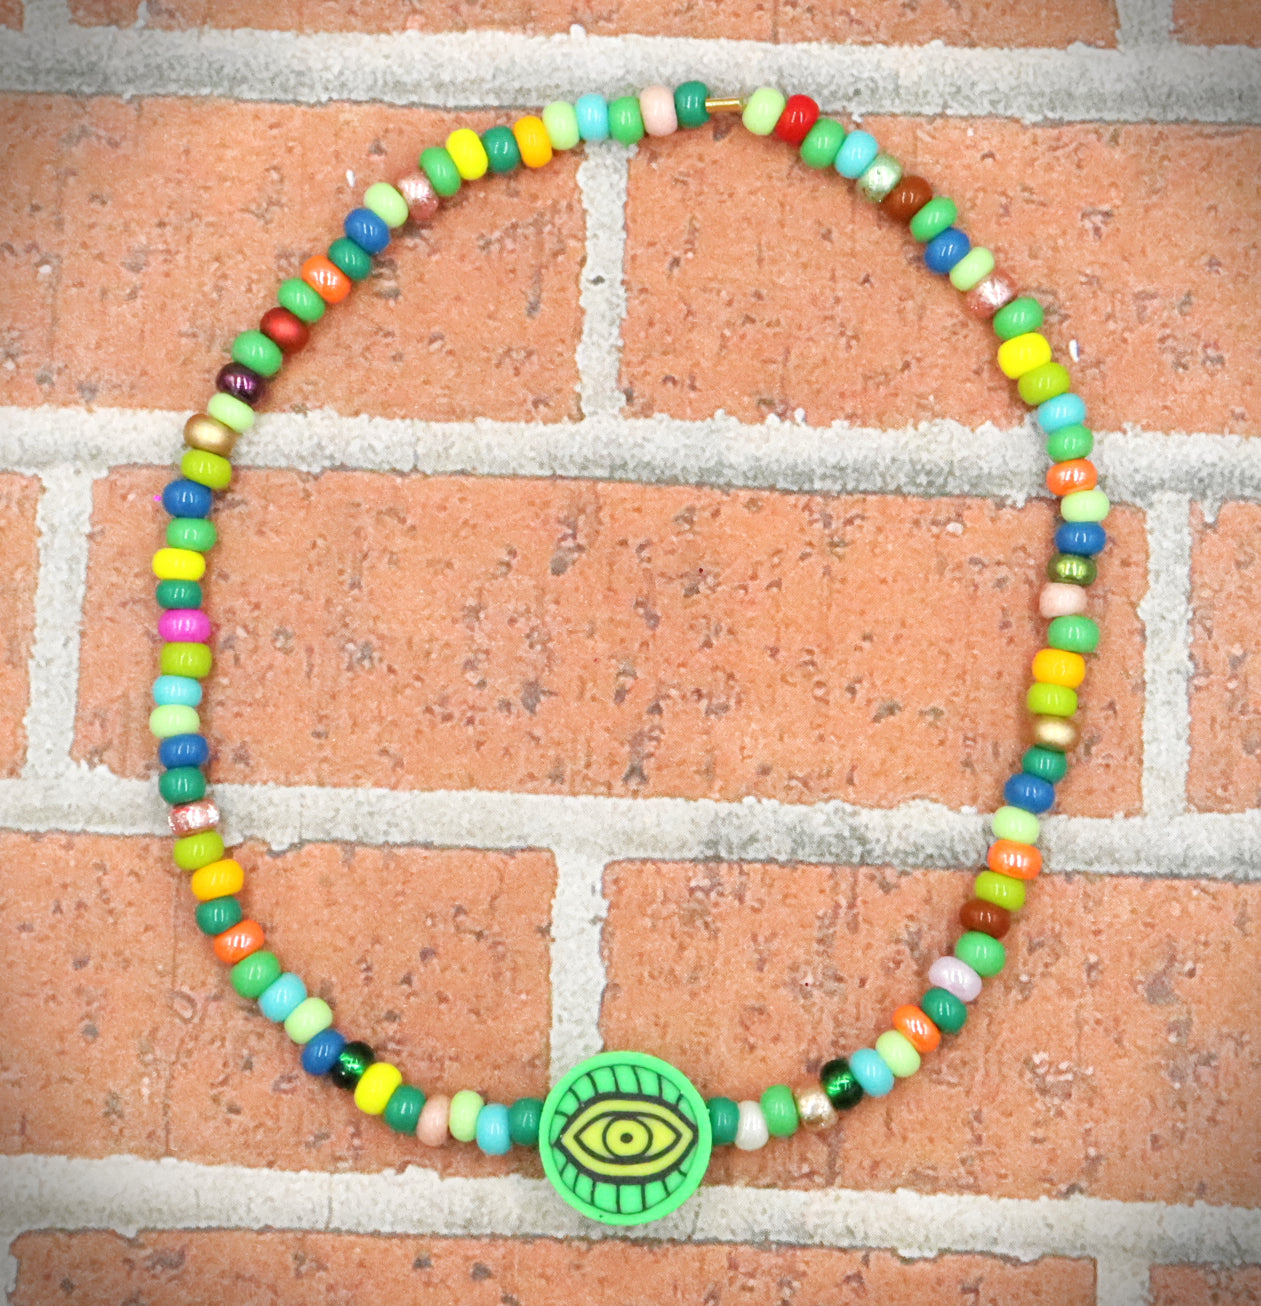 Green Eye of Envy Evil Eye Charm Colorful Seed Bead Stretch Bracelet by Monkey's Mojo